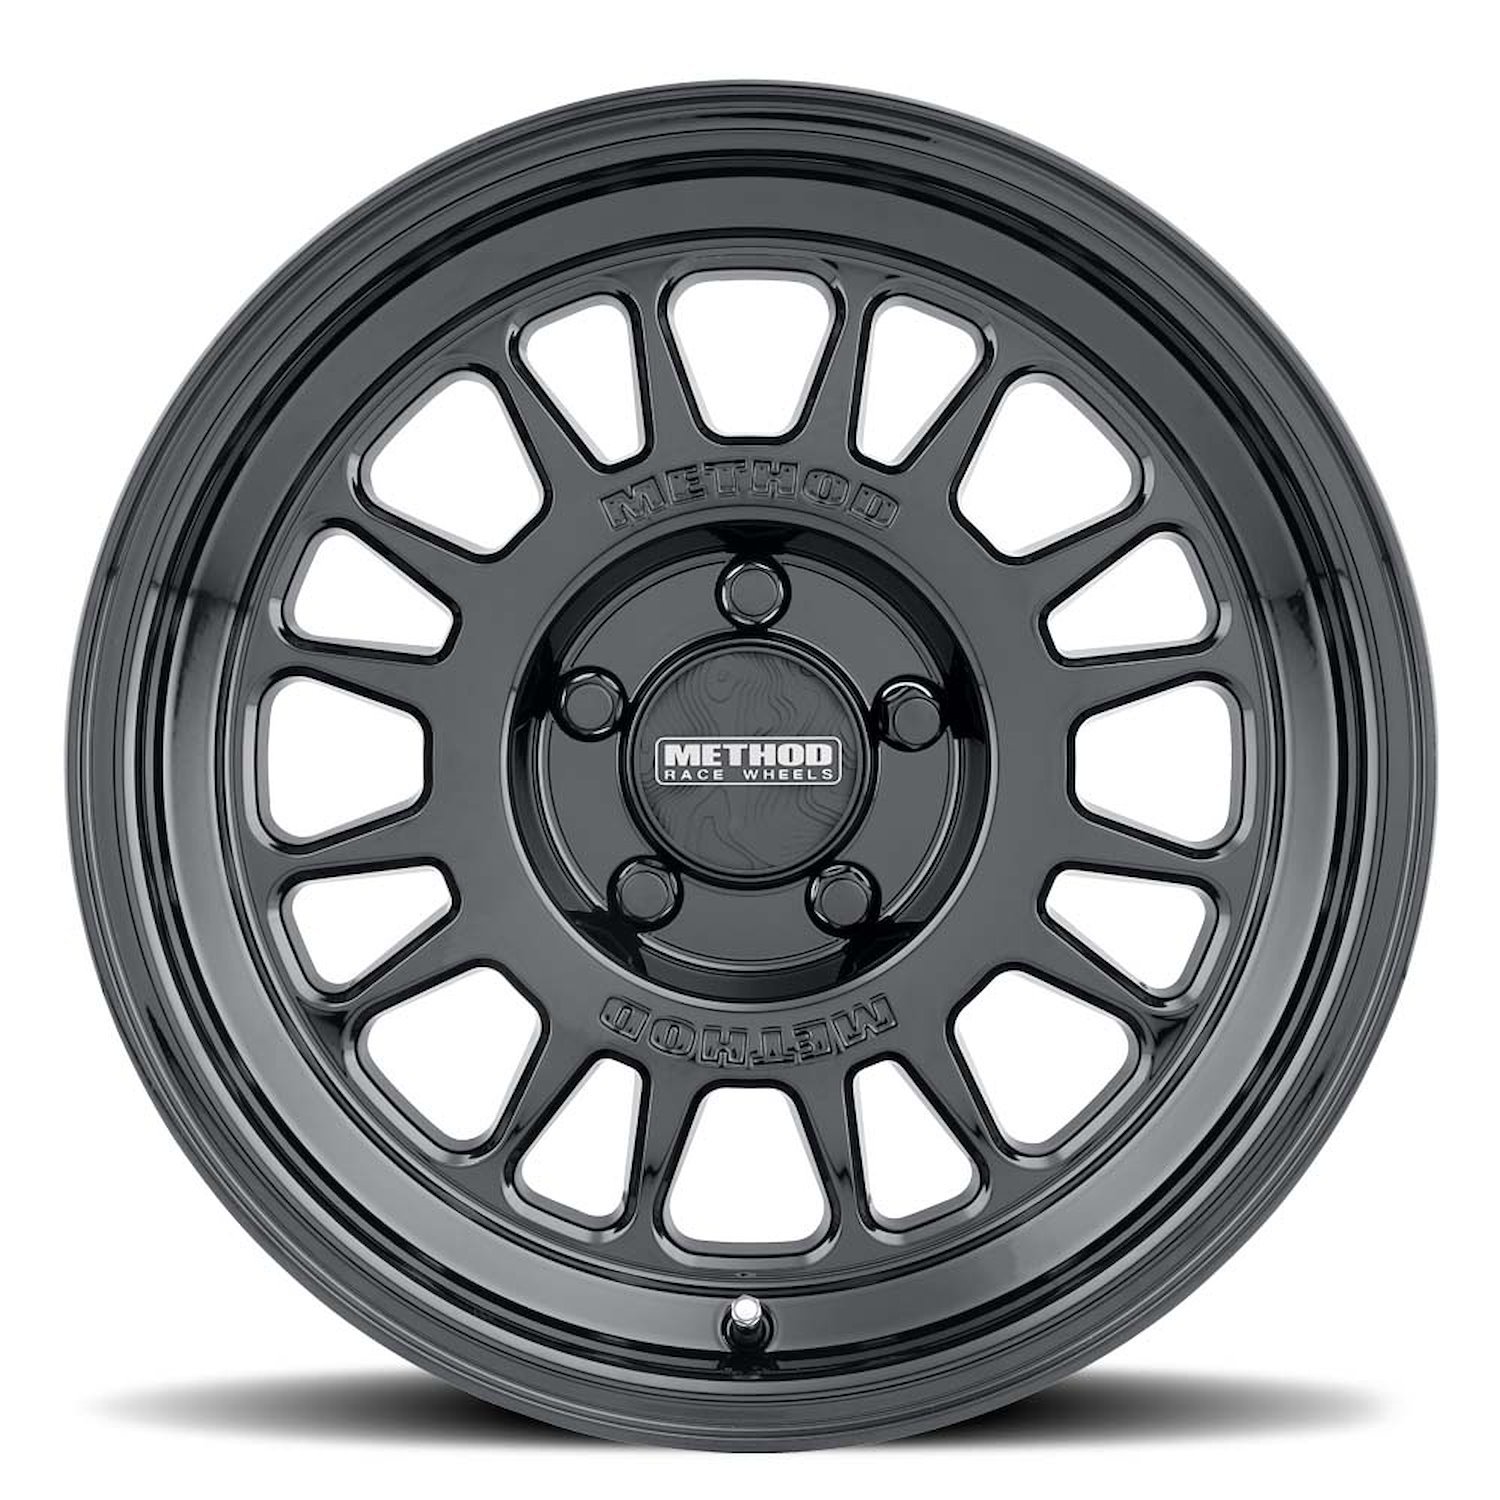 MR318785501325 STREET MR318 Wheel [Size: 17" x 8.5"] Gloss Black